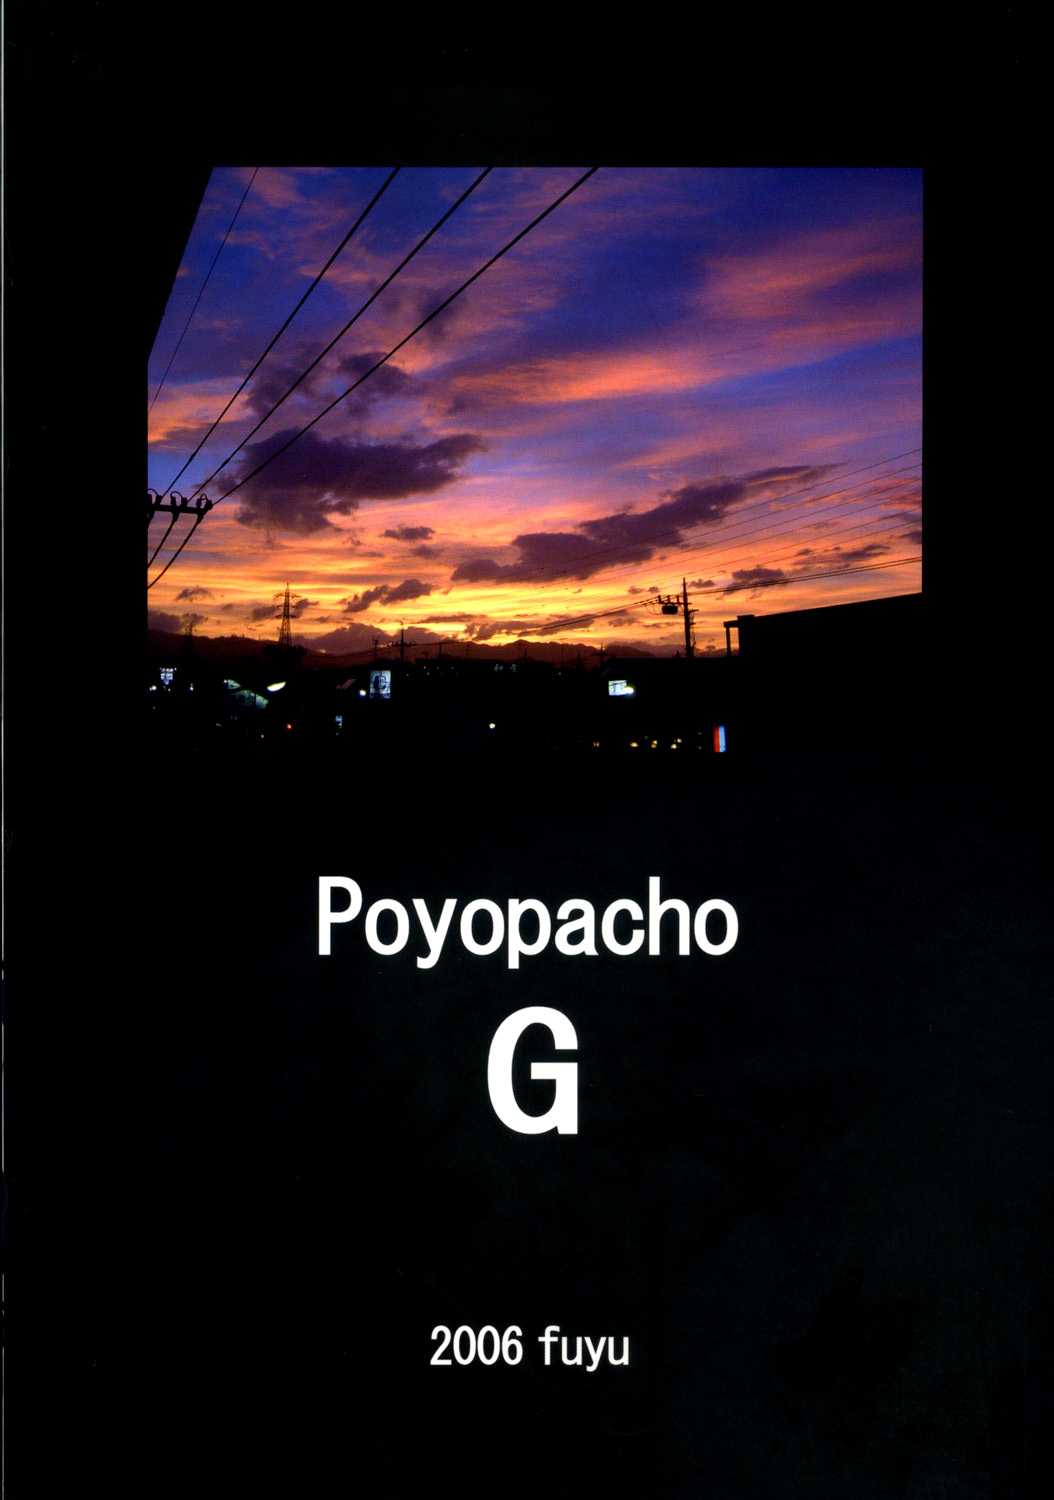 [Poyopacho] - Poyopacho G 